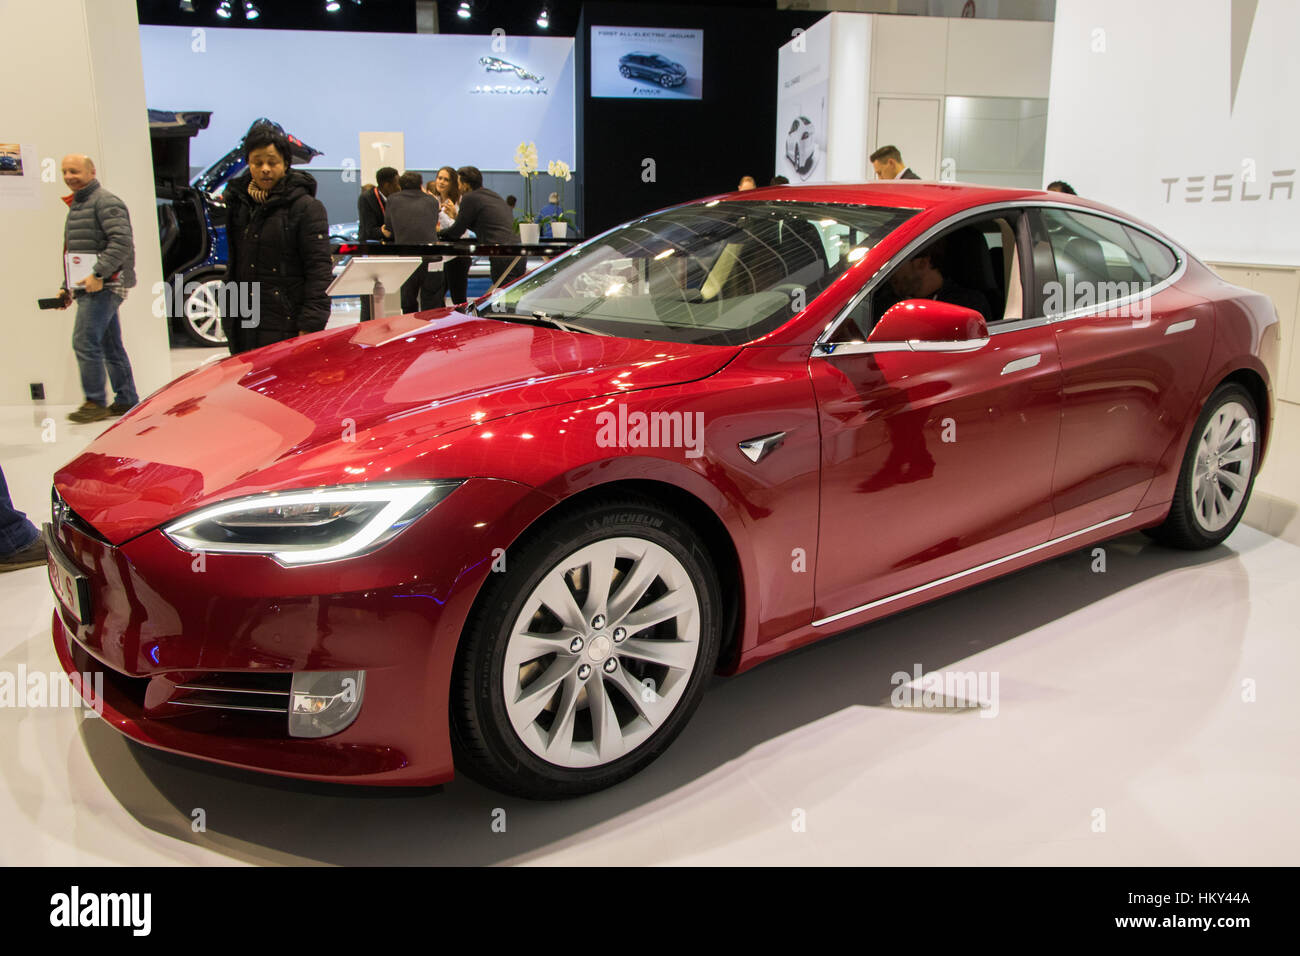 Bruxelles - Jan 19, 2017: Tesla Model S auto elettrica sul display al Motor Show di Bruxelles. Foto Stock